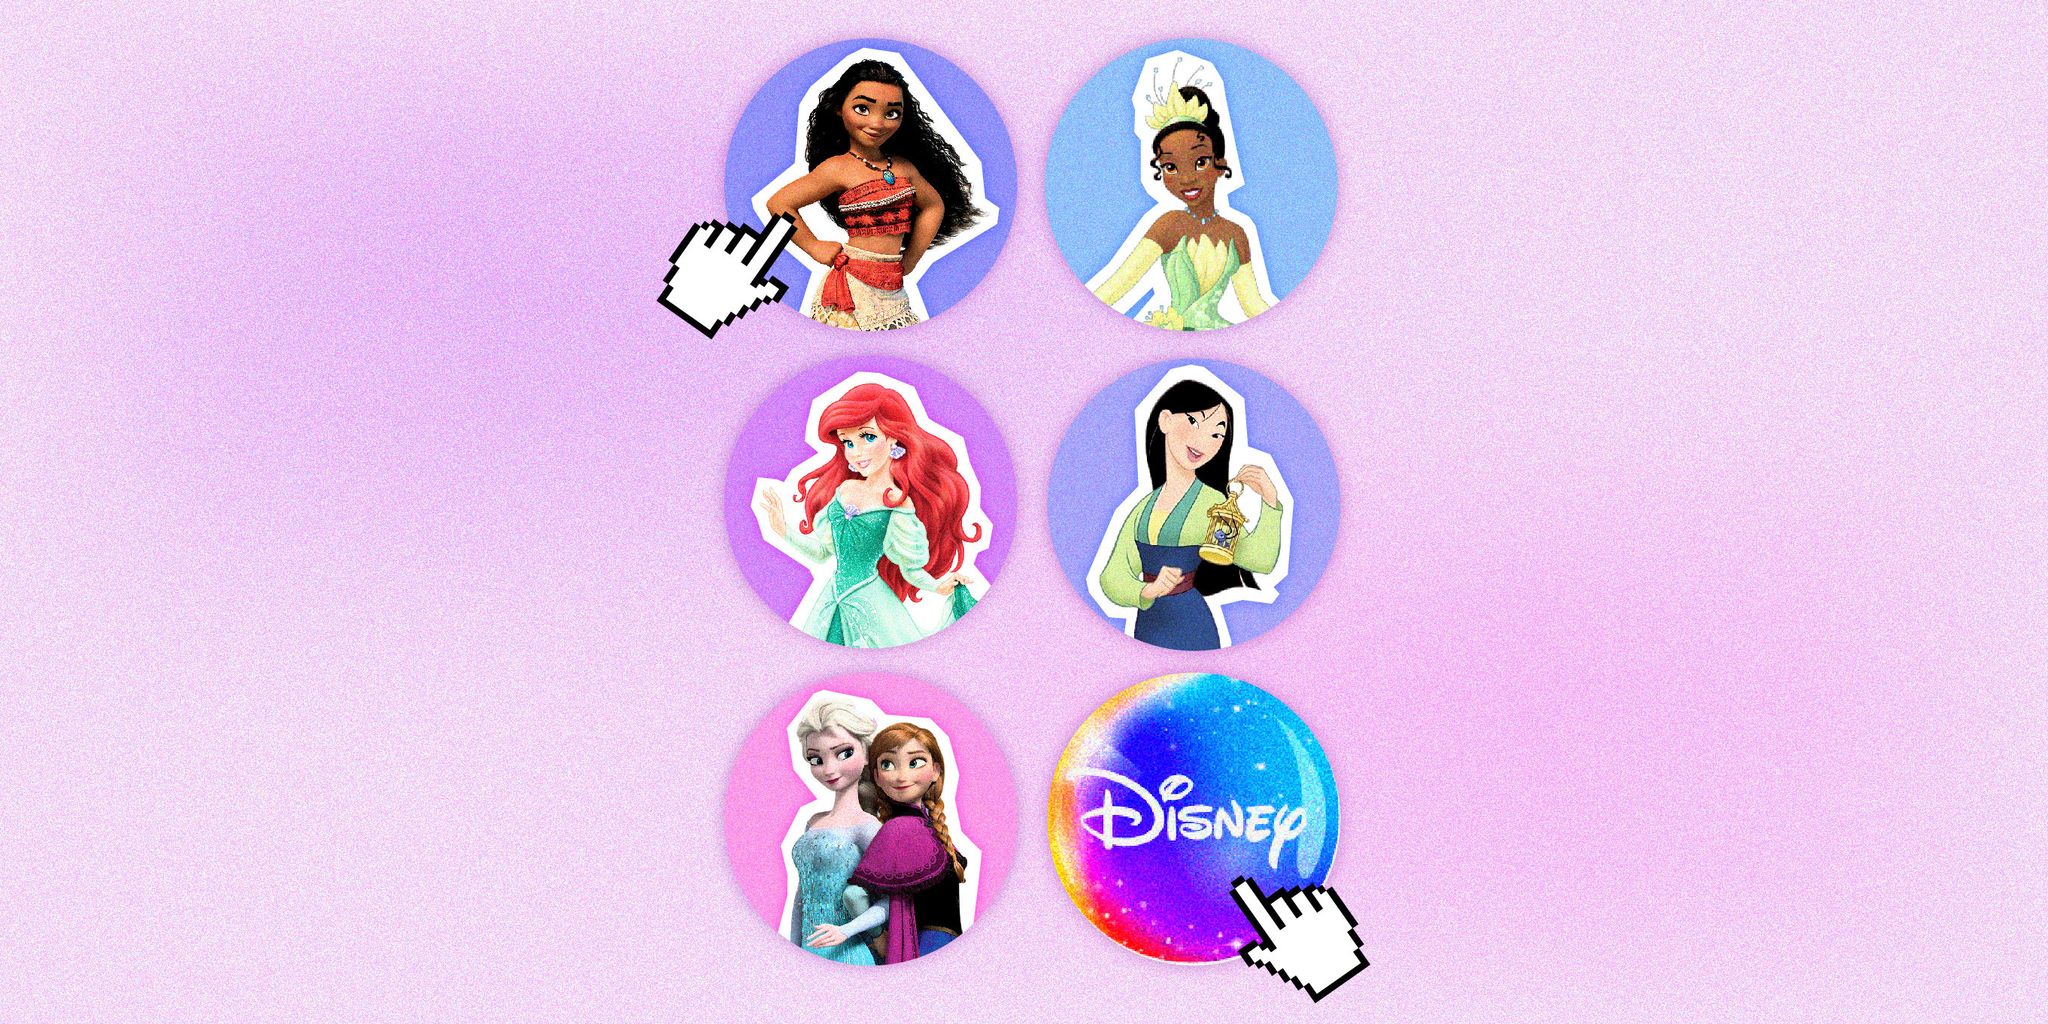 Which Disney Princess Are You? - Take the Disney Princess Quiz 2023